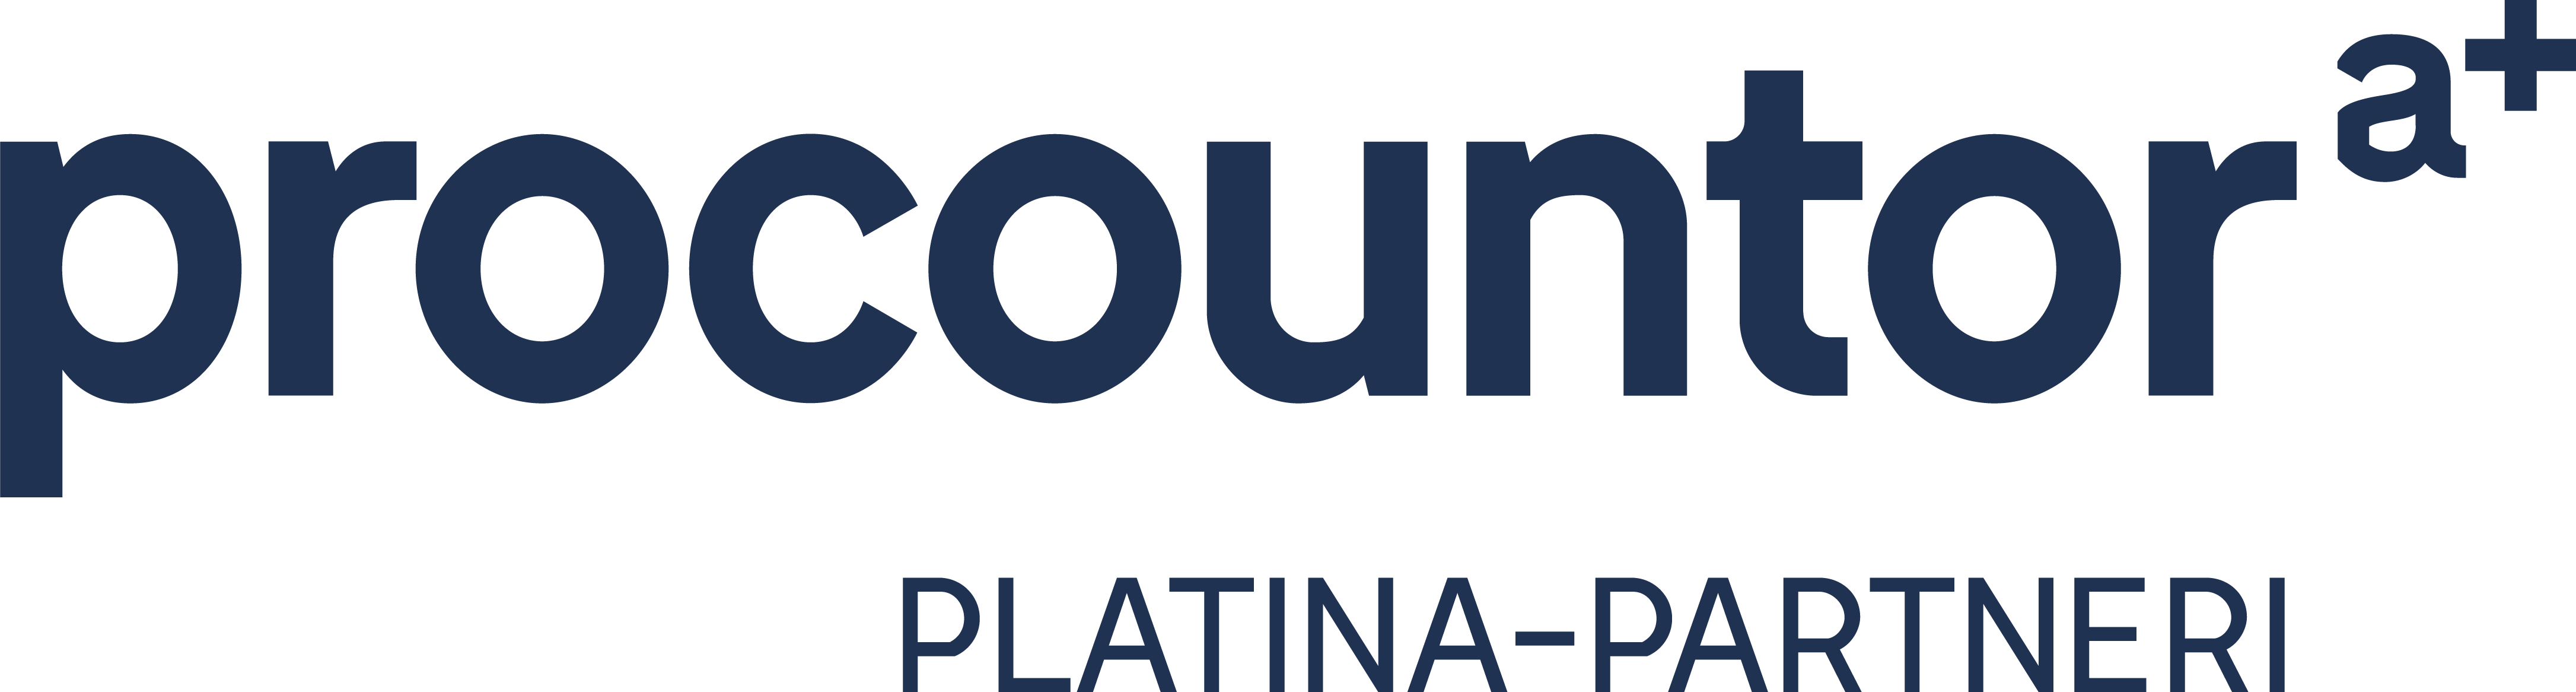 Procountor Platina-partneri